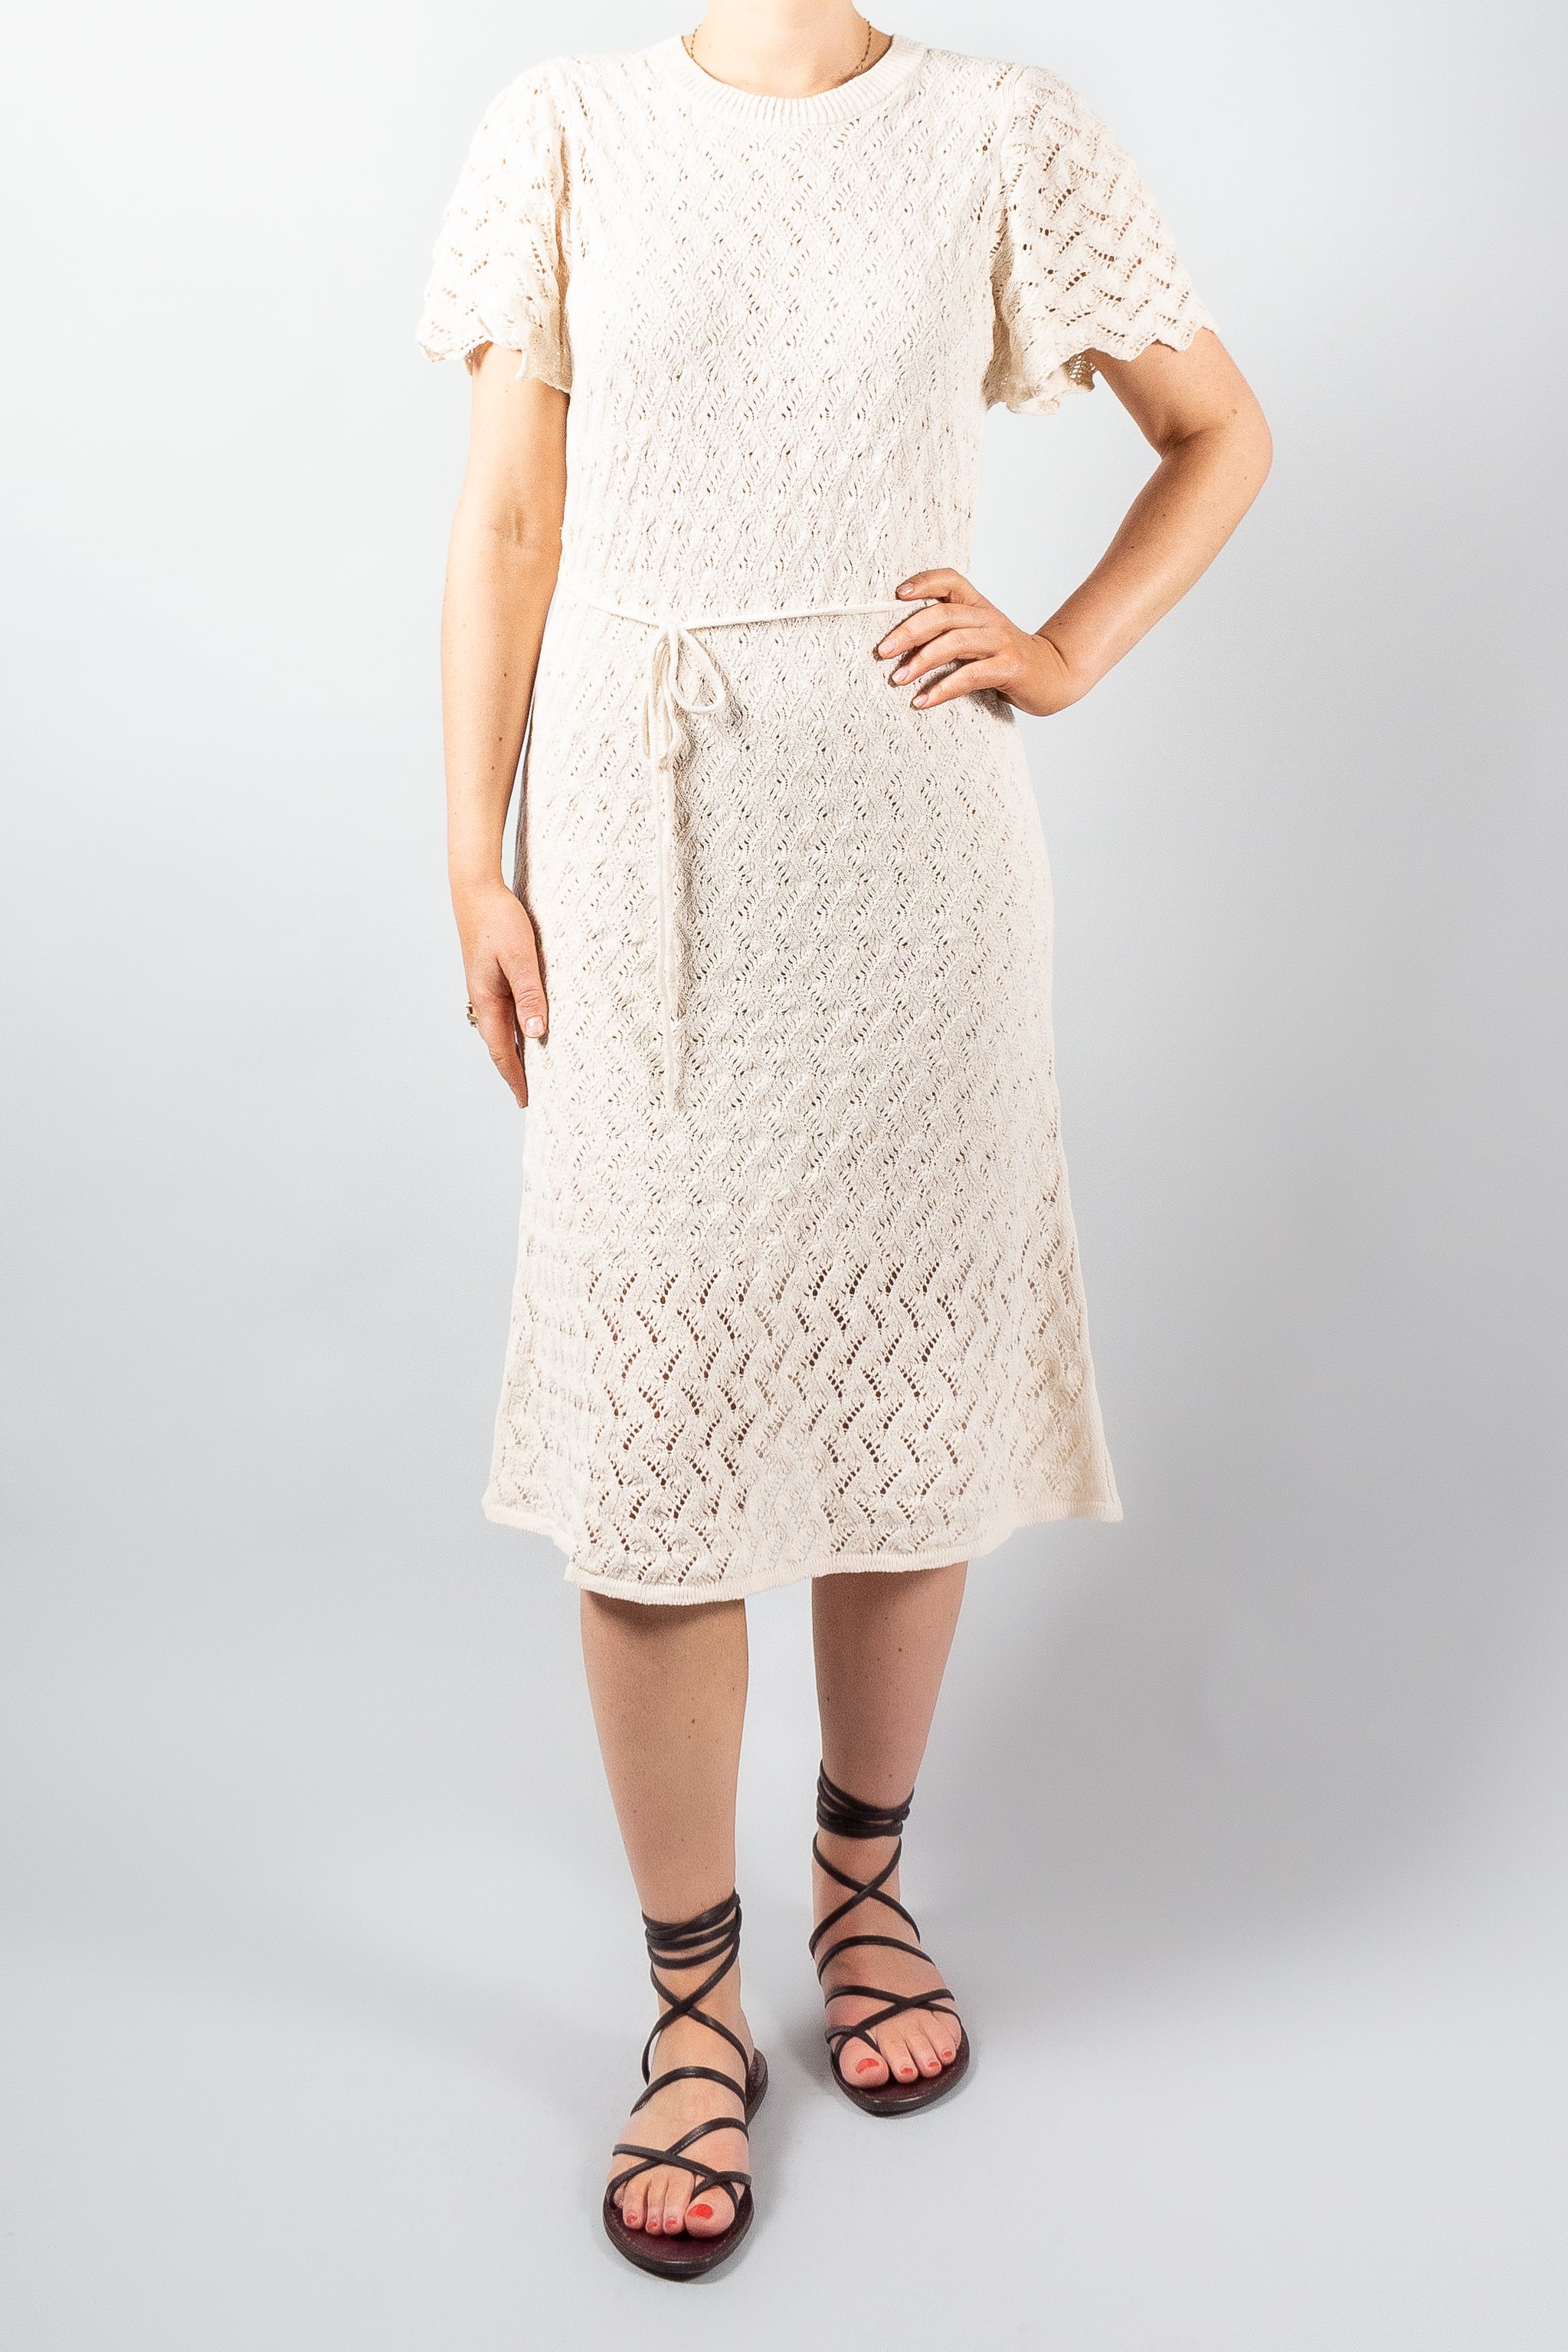 Vanessa Bruno Clementina Crochet Dress-Dresses and Jumpsuits-Misch-Boutique-Vancouver-Canada-misch.ca